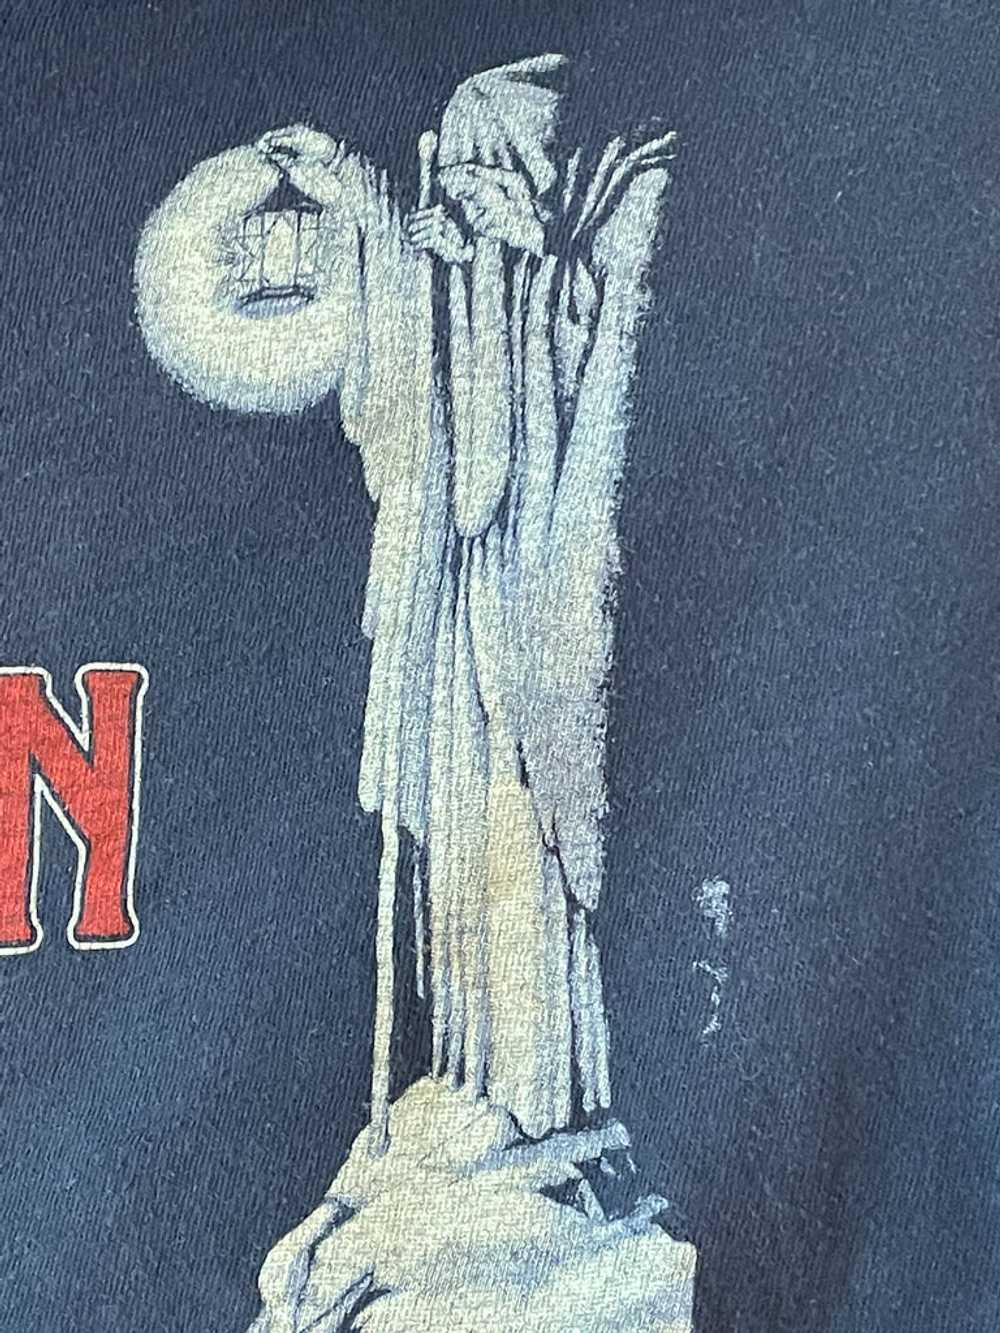 Vintage Led Zeppelin Tee Shirt, Hanes Label M - image 6